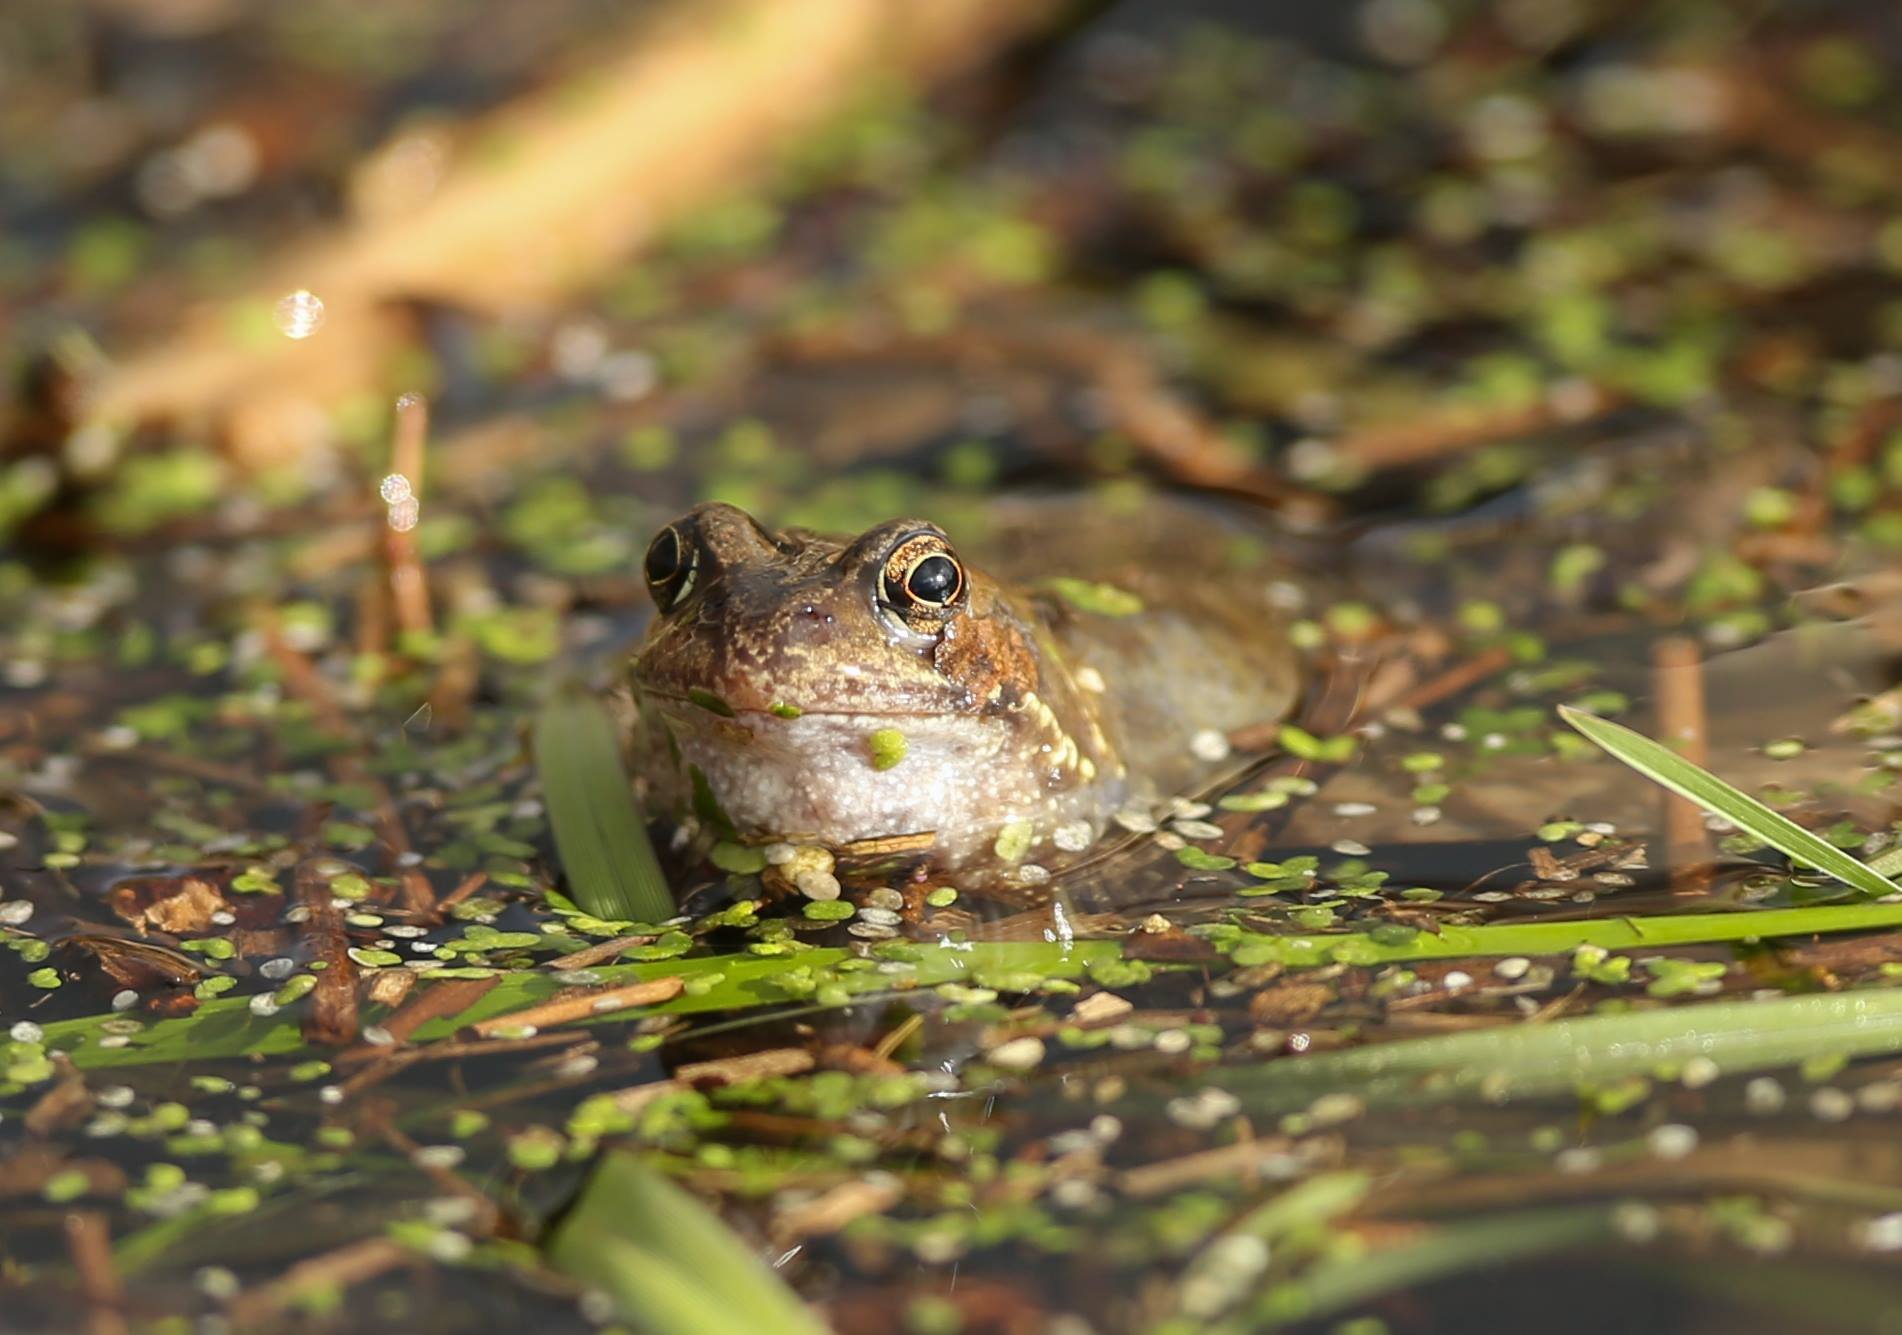 https://www.amphibians.org/wp-content/uploads/2019/05/Common-Frog-c-Londonderry-Desmond-Loughery-2.jpg